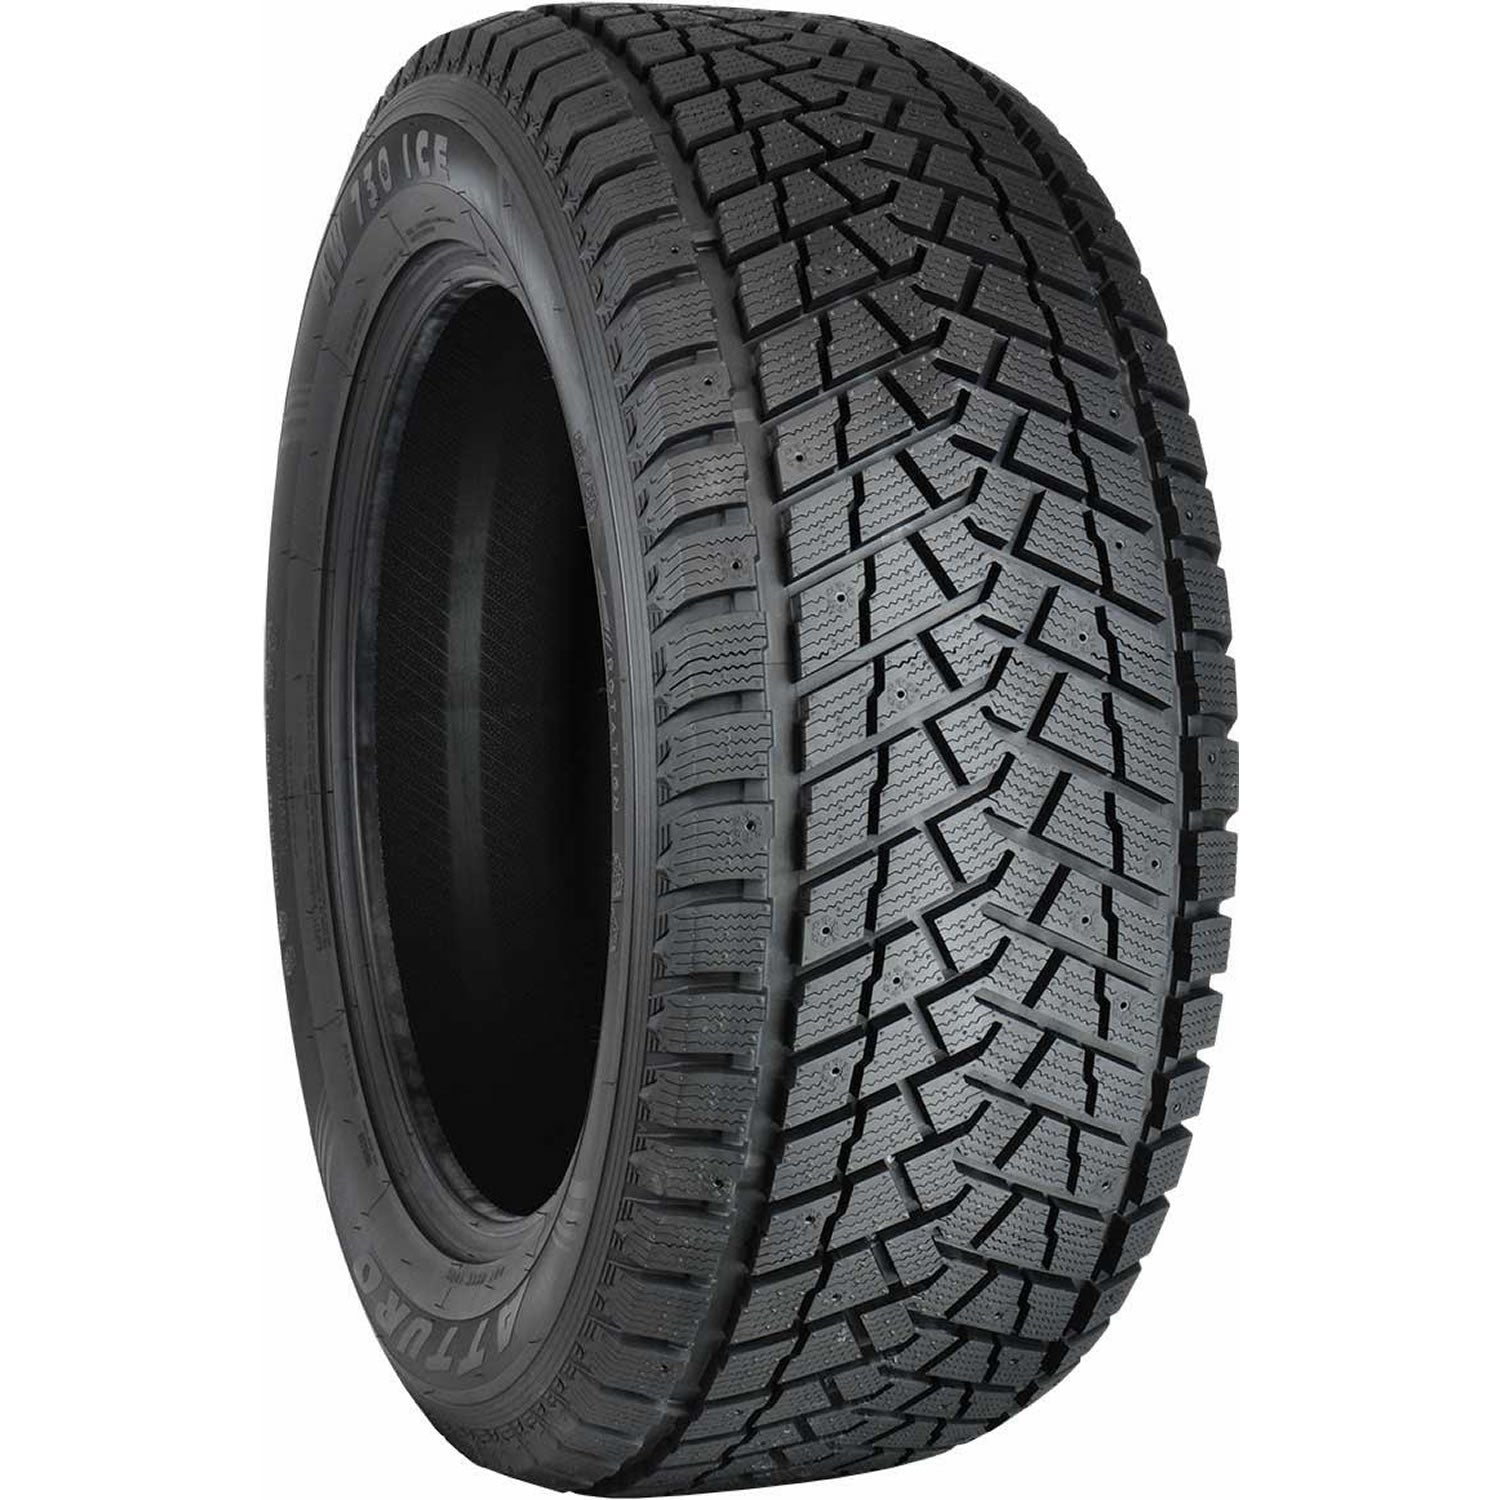 ATTURO AW730 ICE 275/40R21 (29.7X10.8R 21) Tires